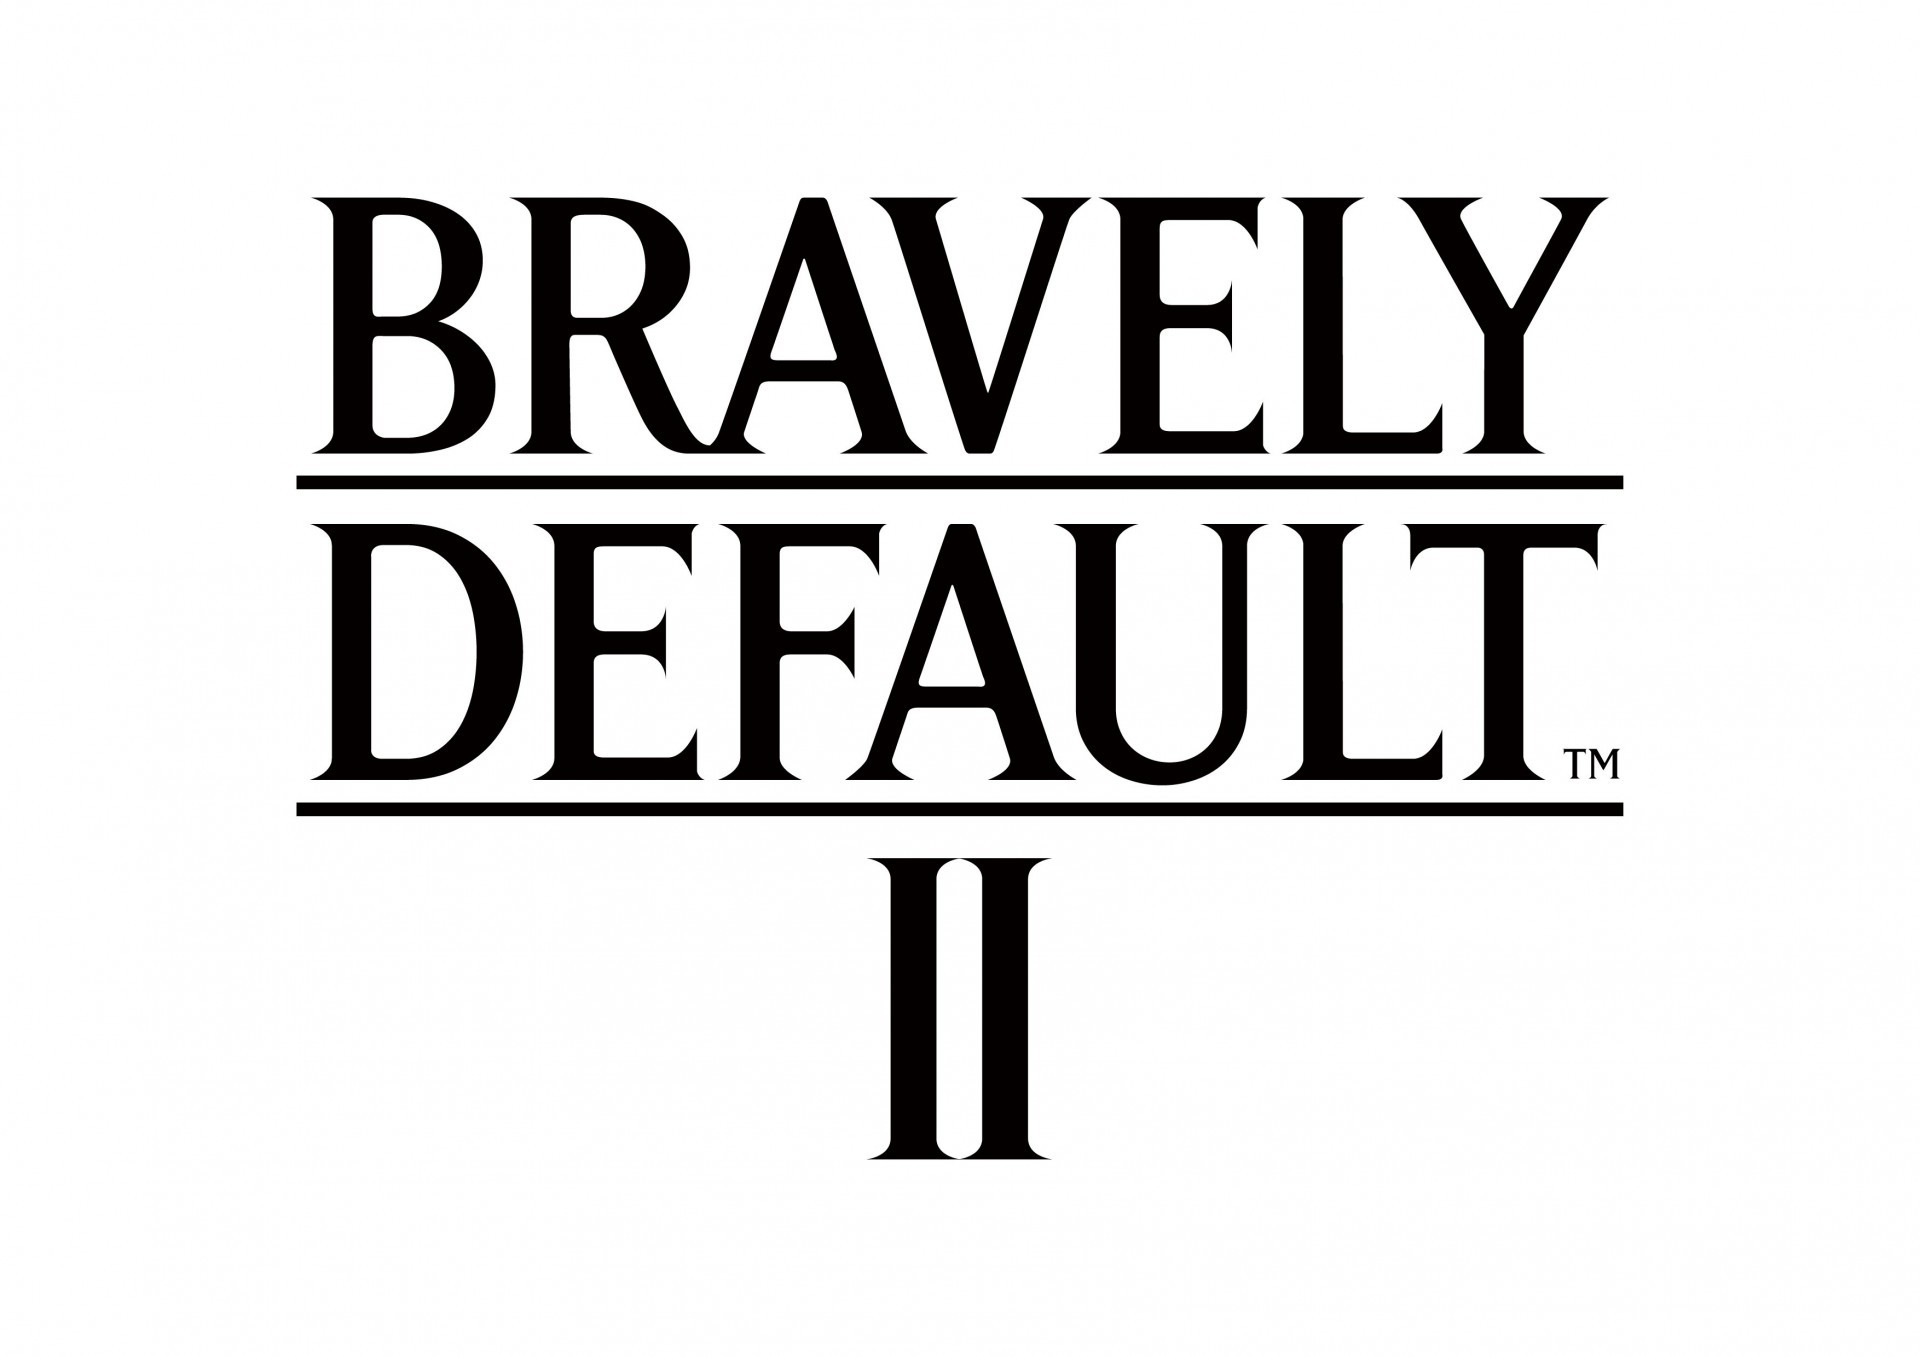 《Bravely Default II》中文數位版開放預購 將釋出中文字幕版問卷調查回應影片